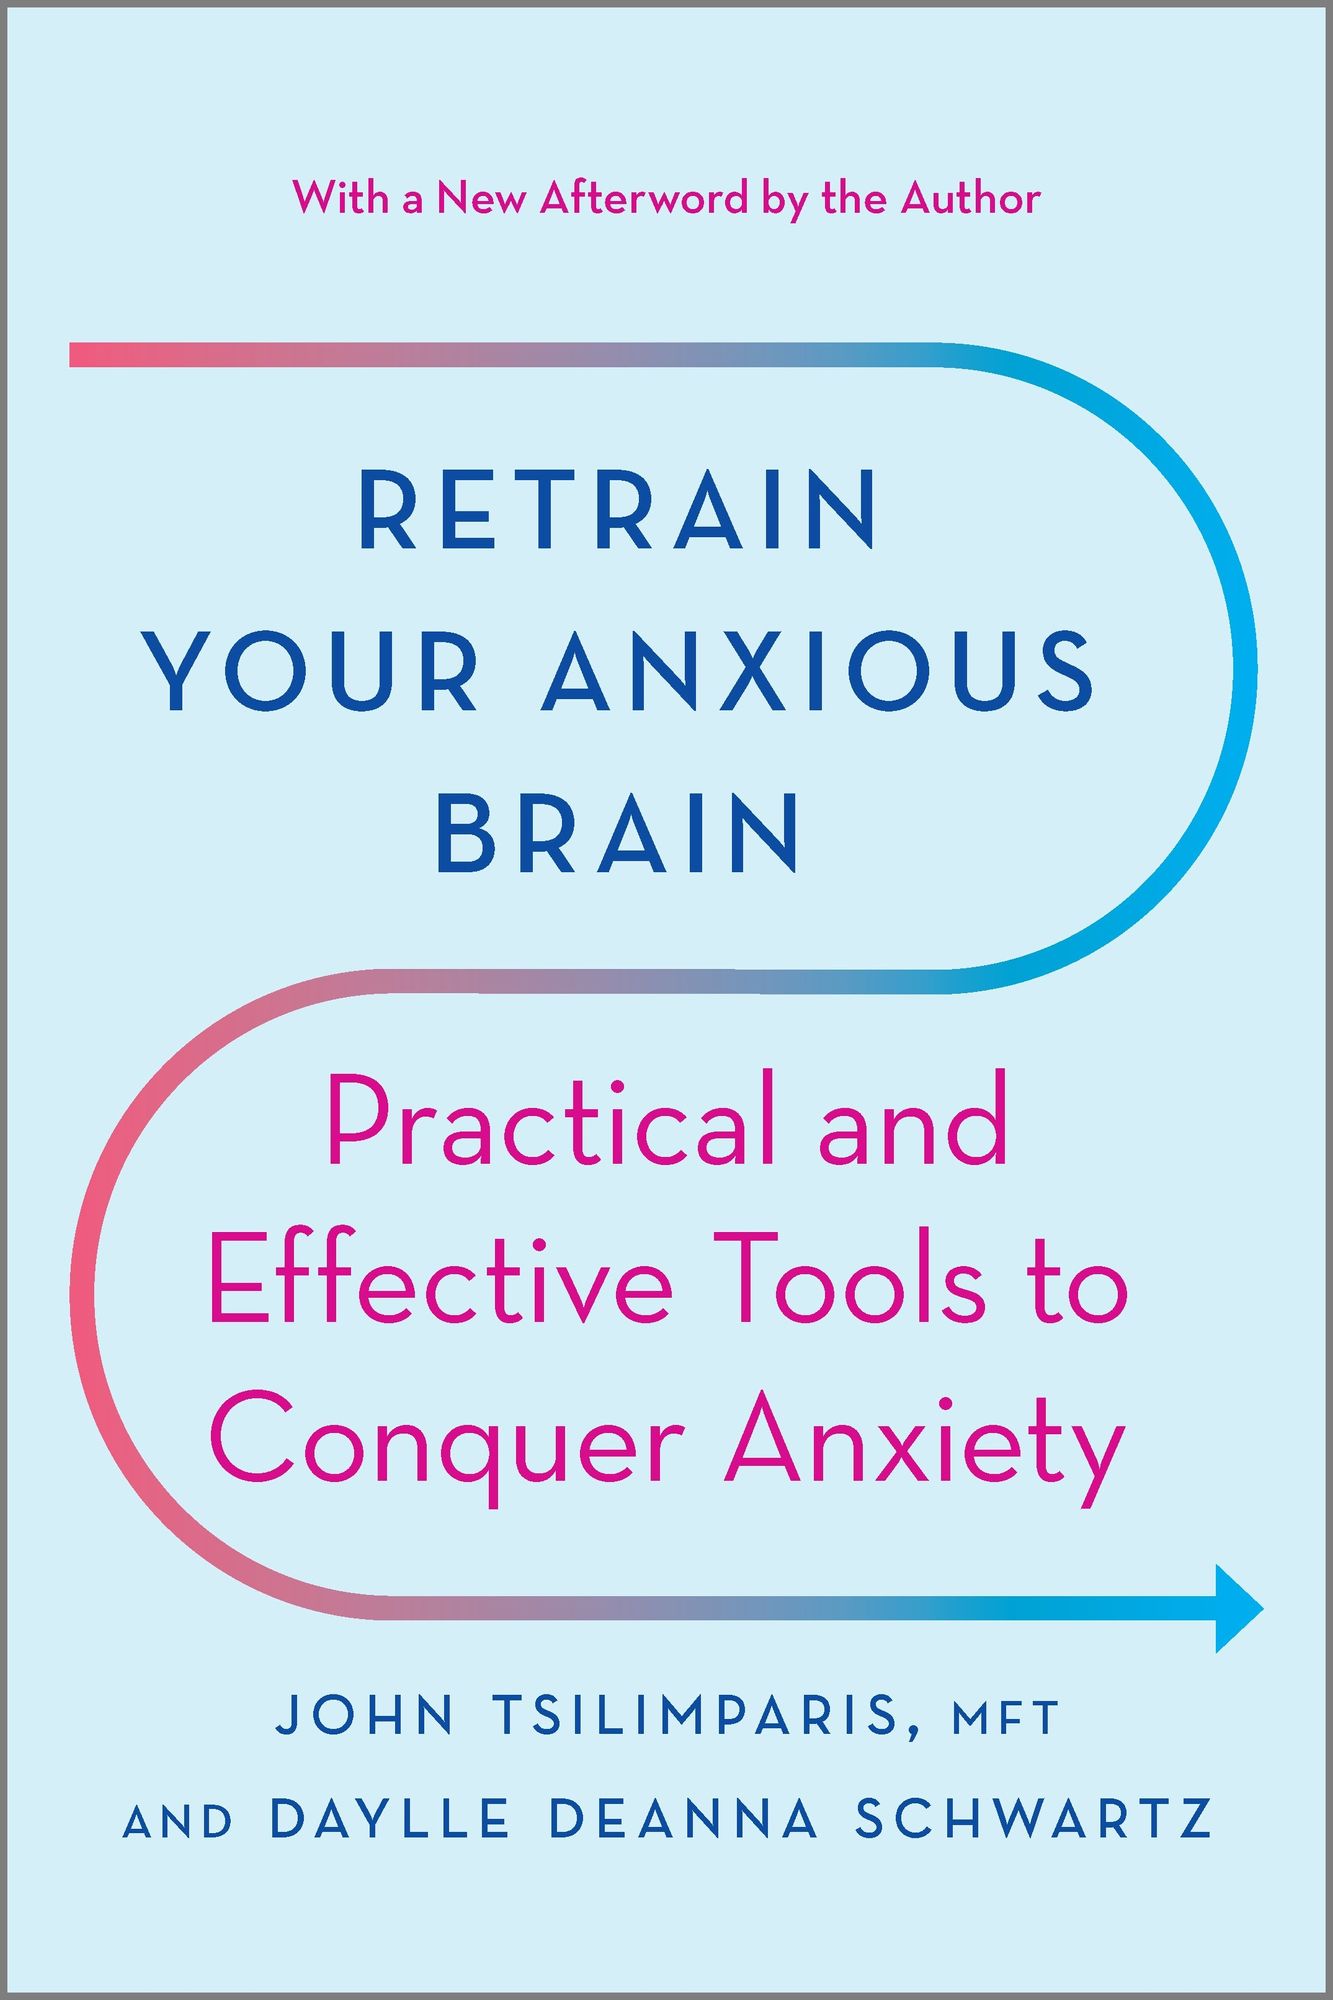 Retrain Your Anxious Brain by John Tsilimparis, Daylle Deanna Schwartz